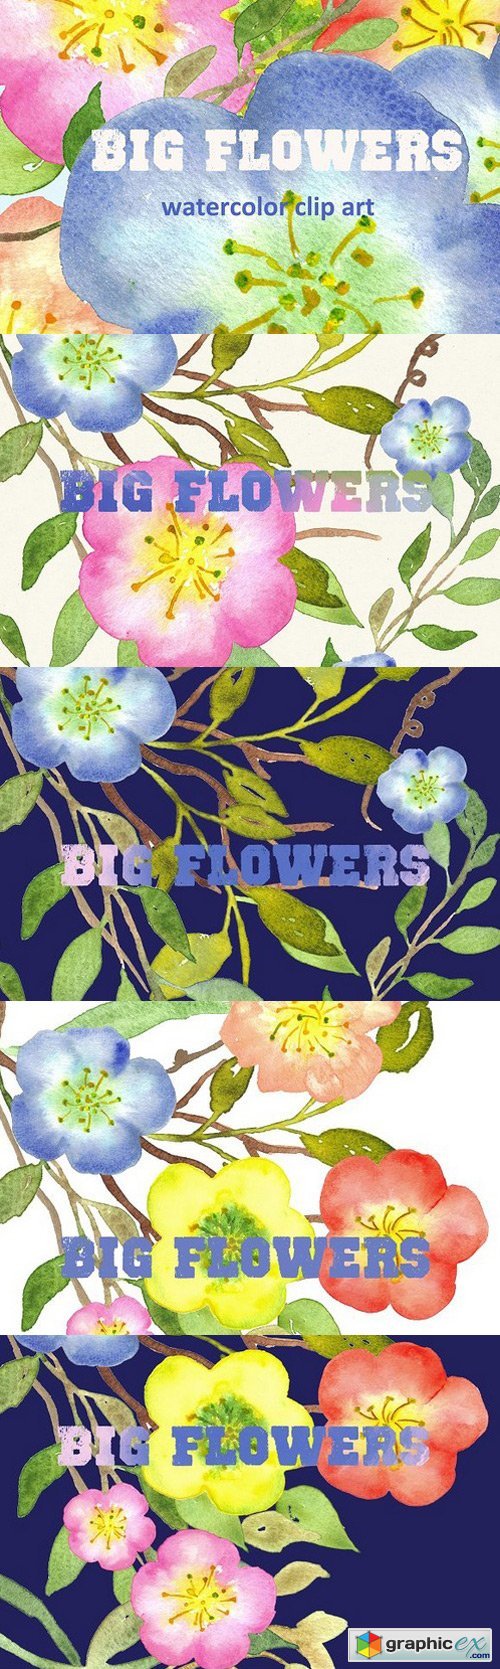 Big Flowers watercolor clip art